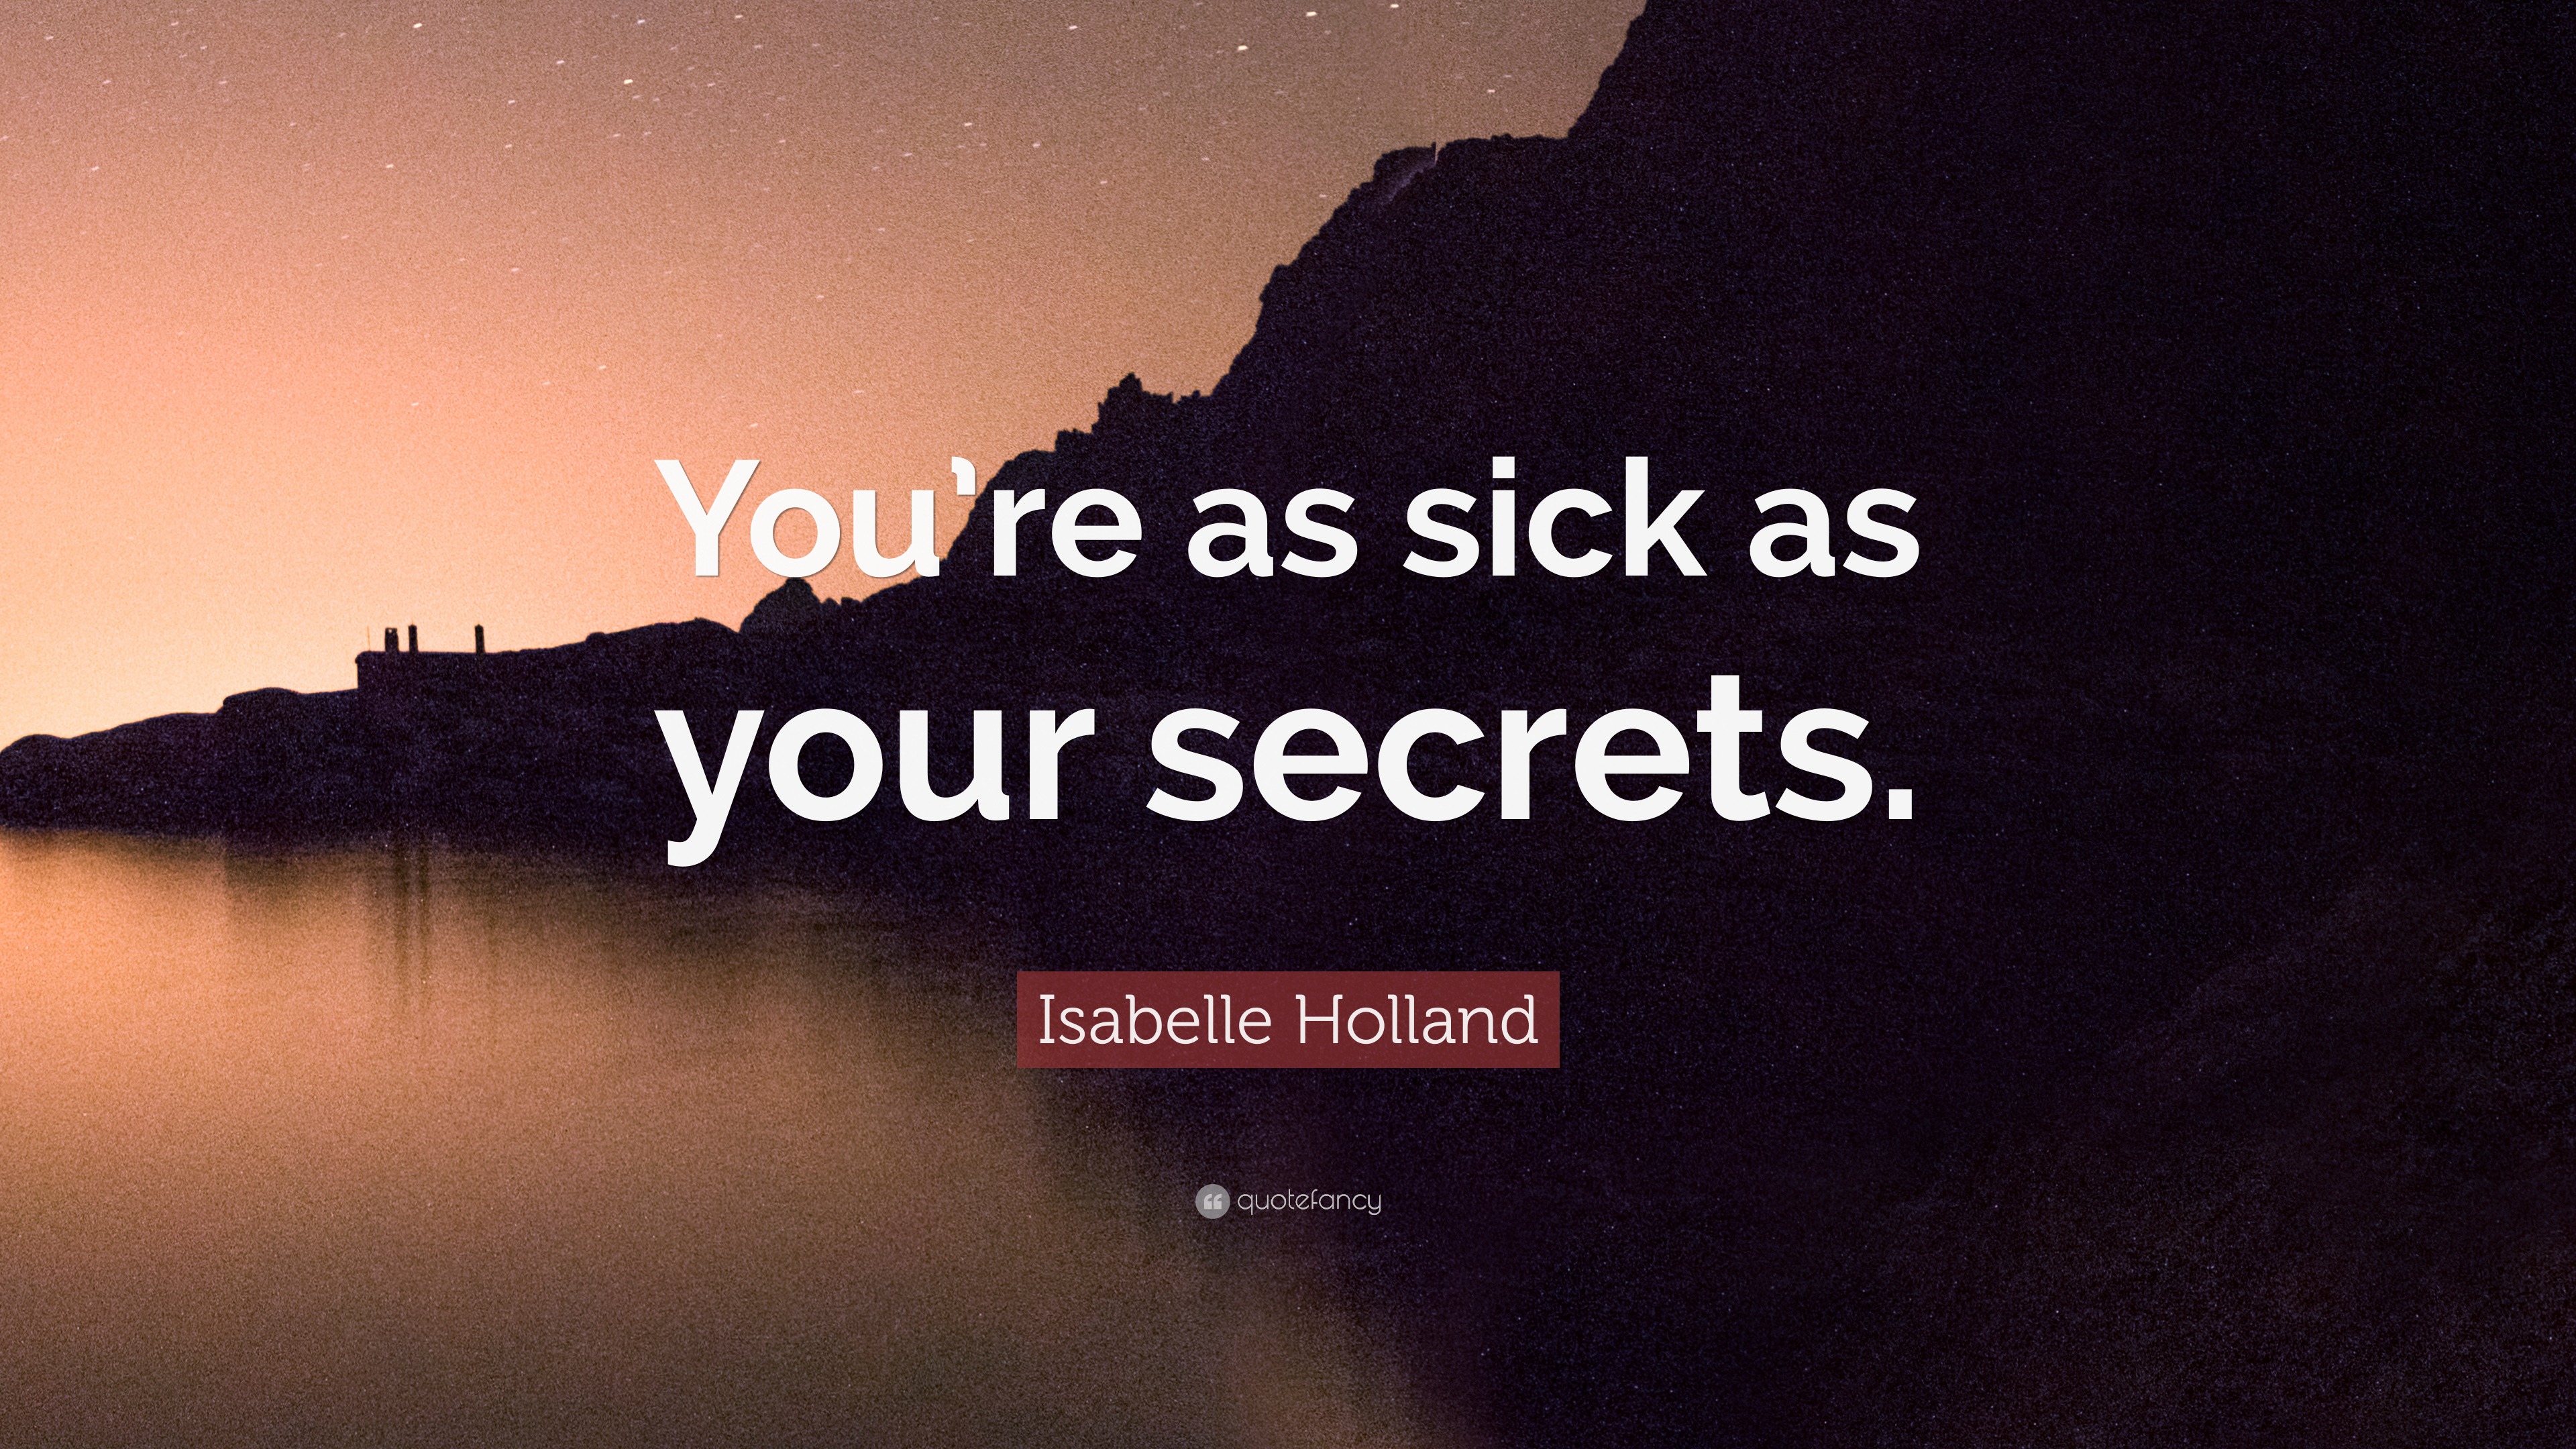 Secrets Make You Sick